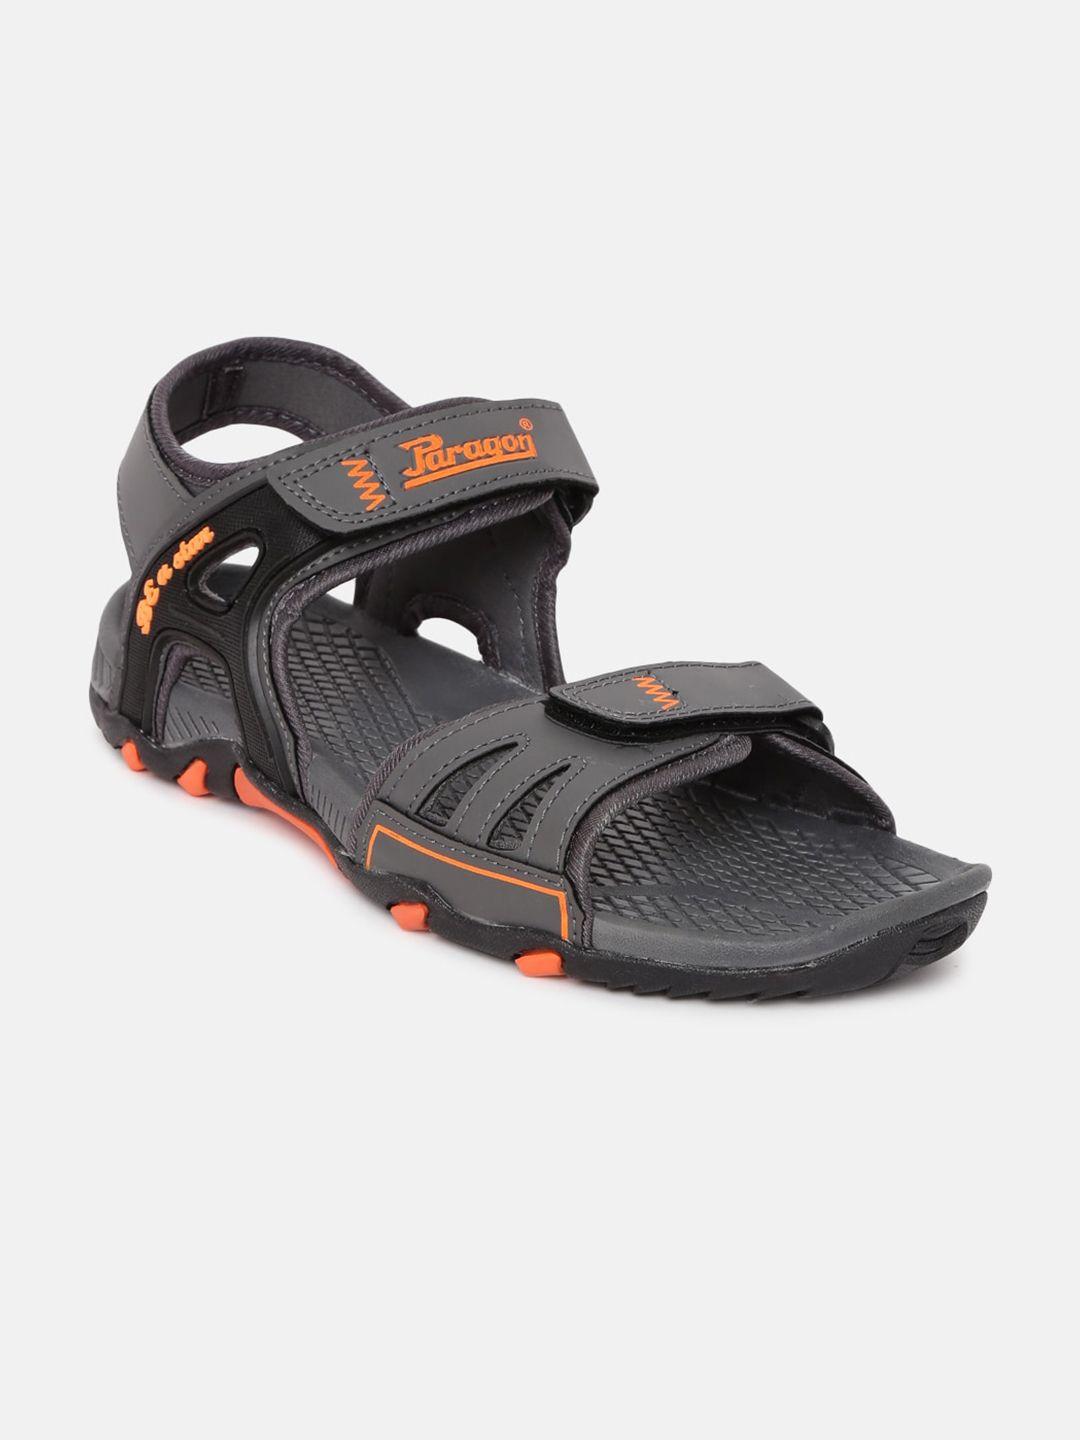 paragon men grey & orange sports sandals